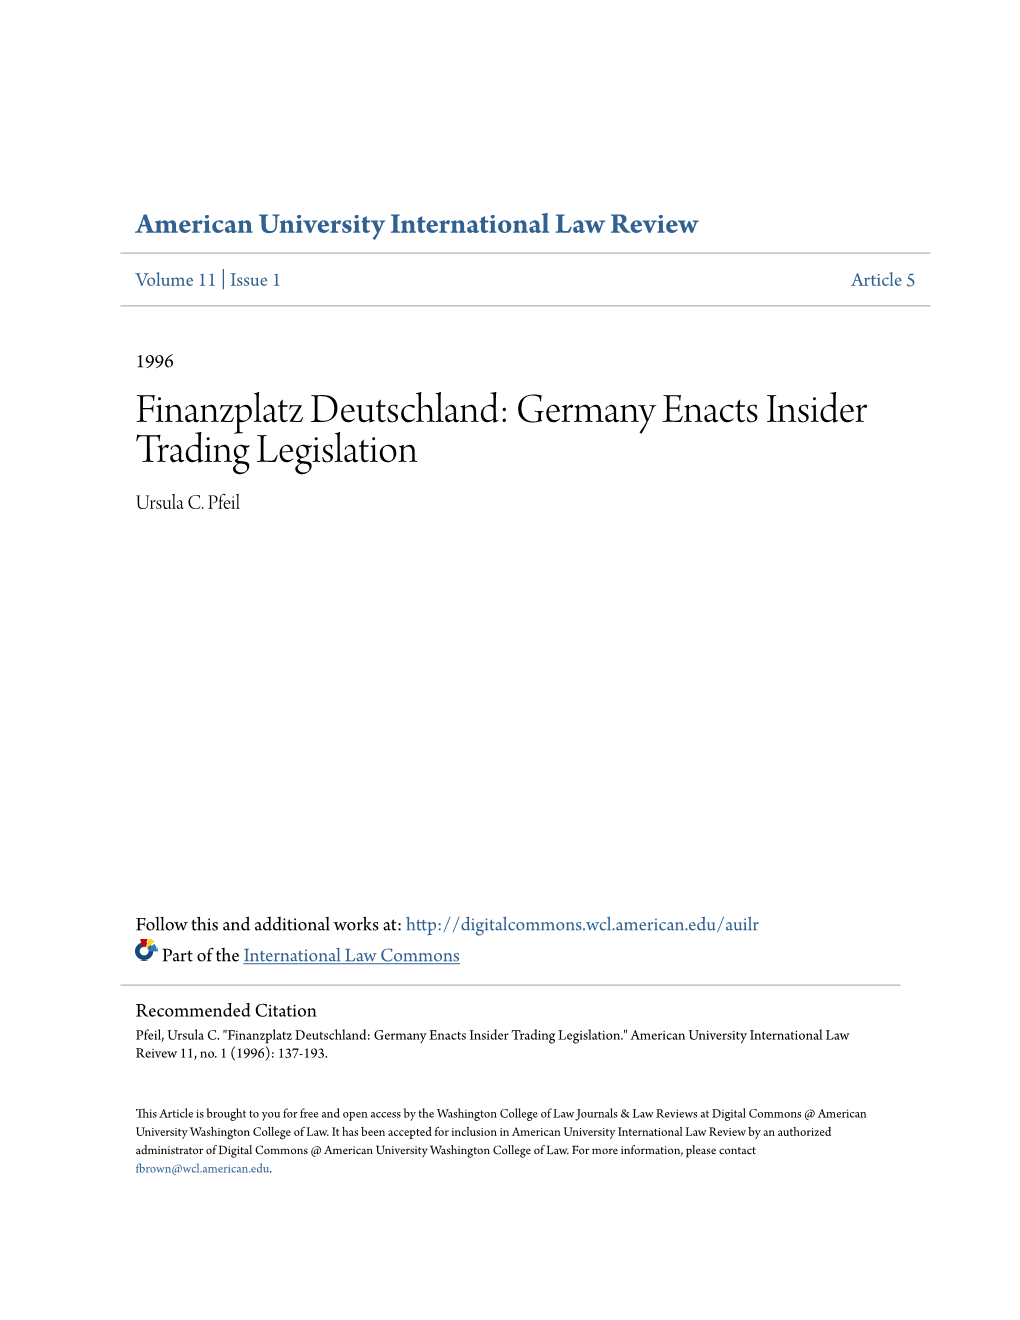 Germany Enacts Insider Trading Legislation Ursula C